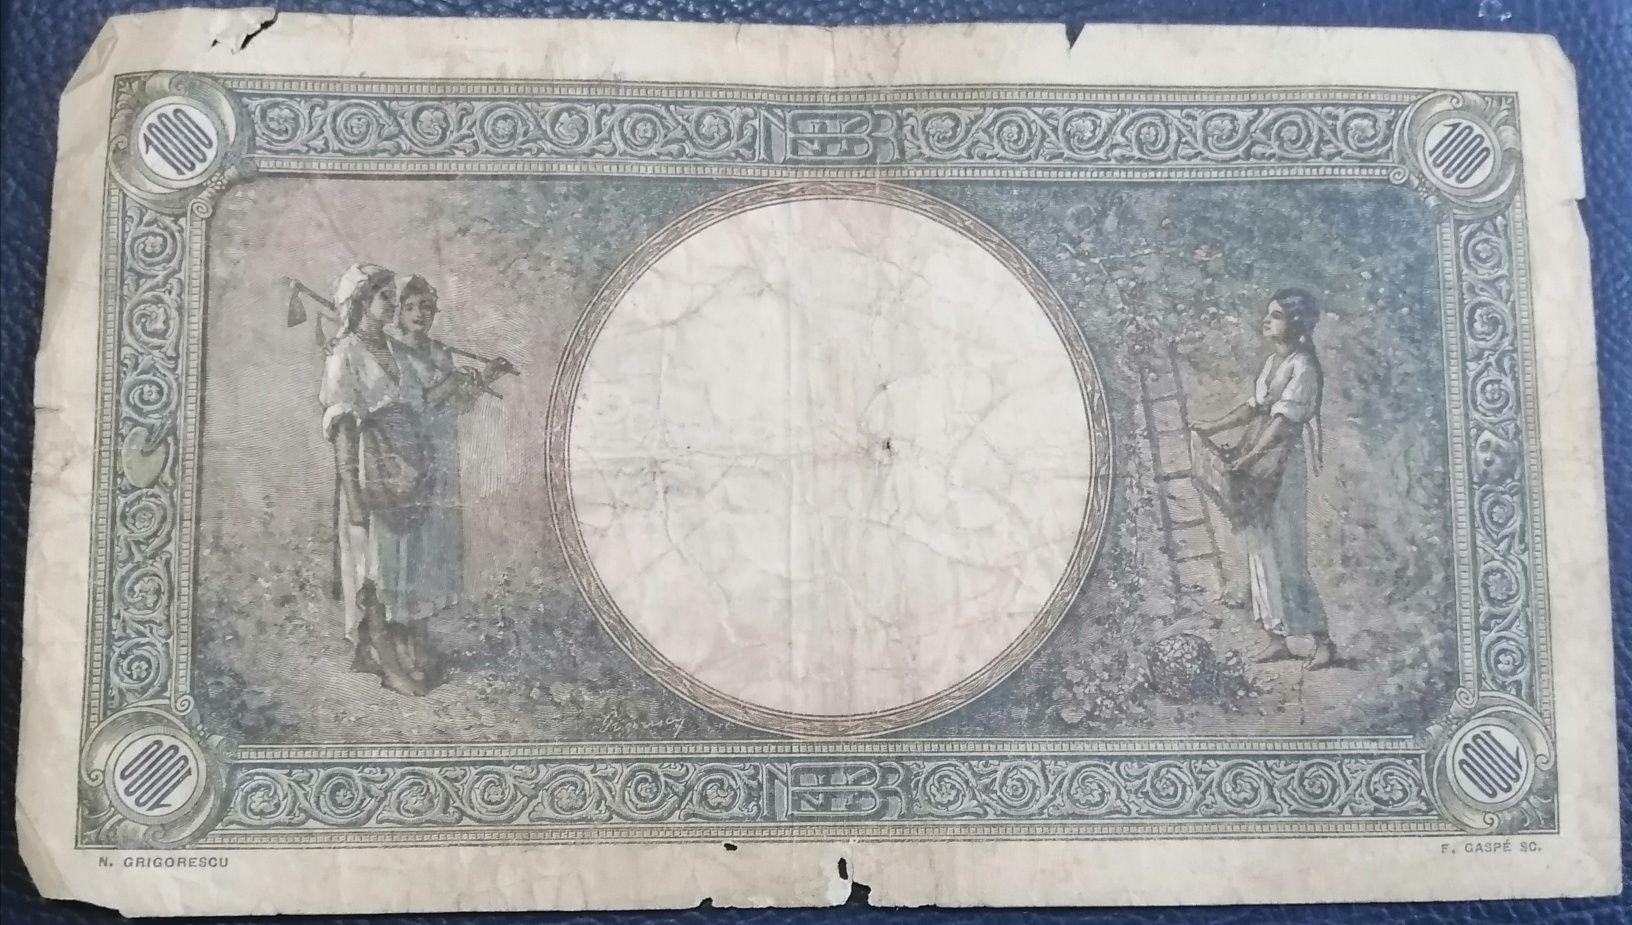 Bancnote vechi românești